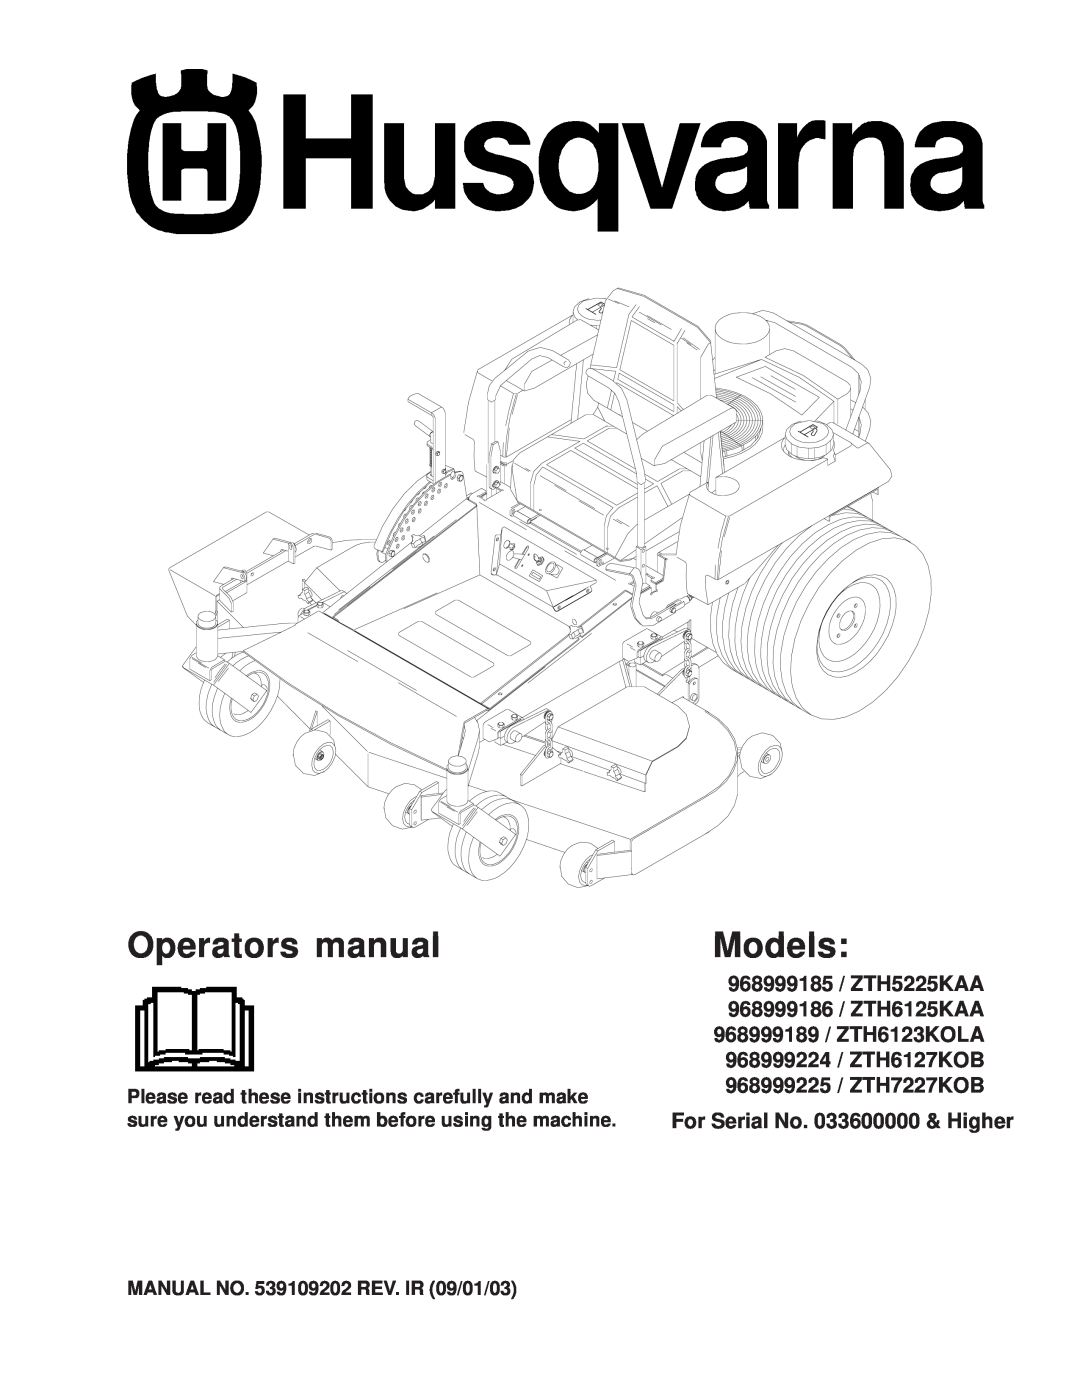 Husqvarna 968999225 / ZTH7227KOB manual Operators manual, Models, 968999185 / ZTH5225KAA 968999186 / ZTH6125KAA 